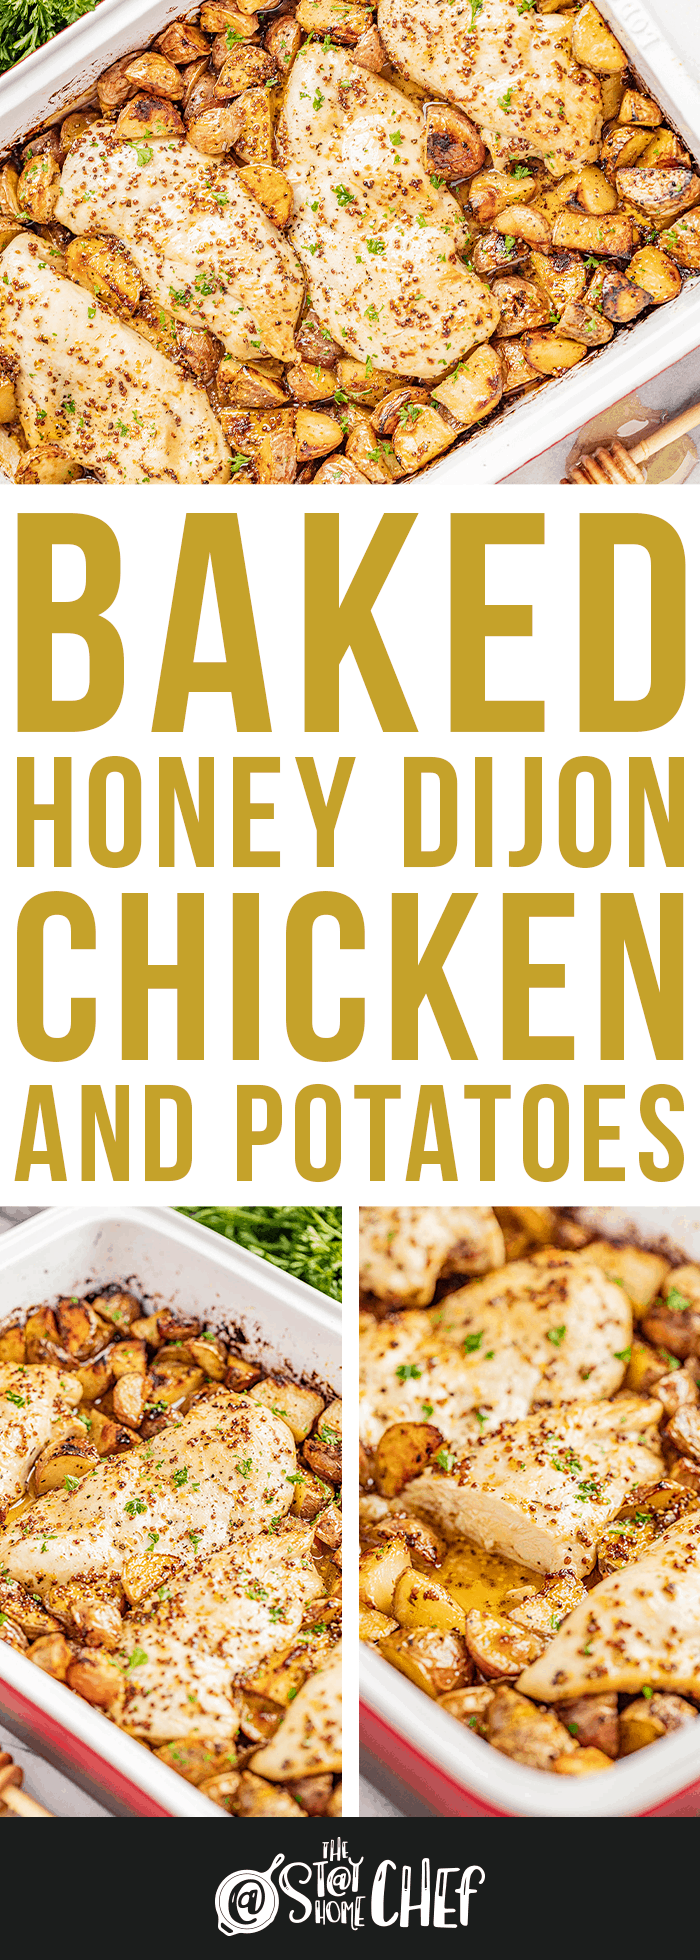 Baked Honey Dijon Chicken and Potatoes